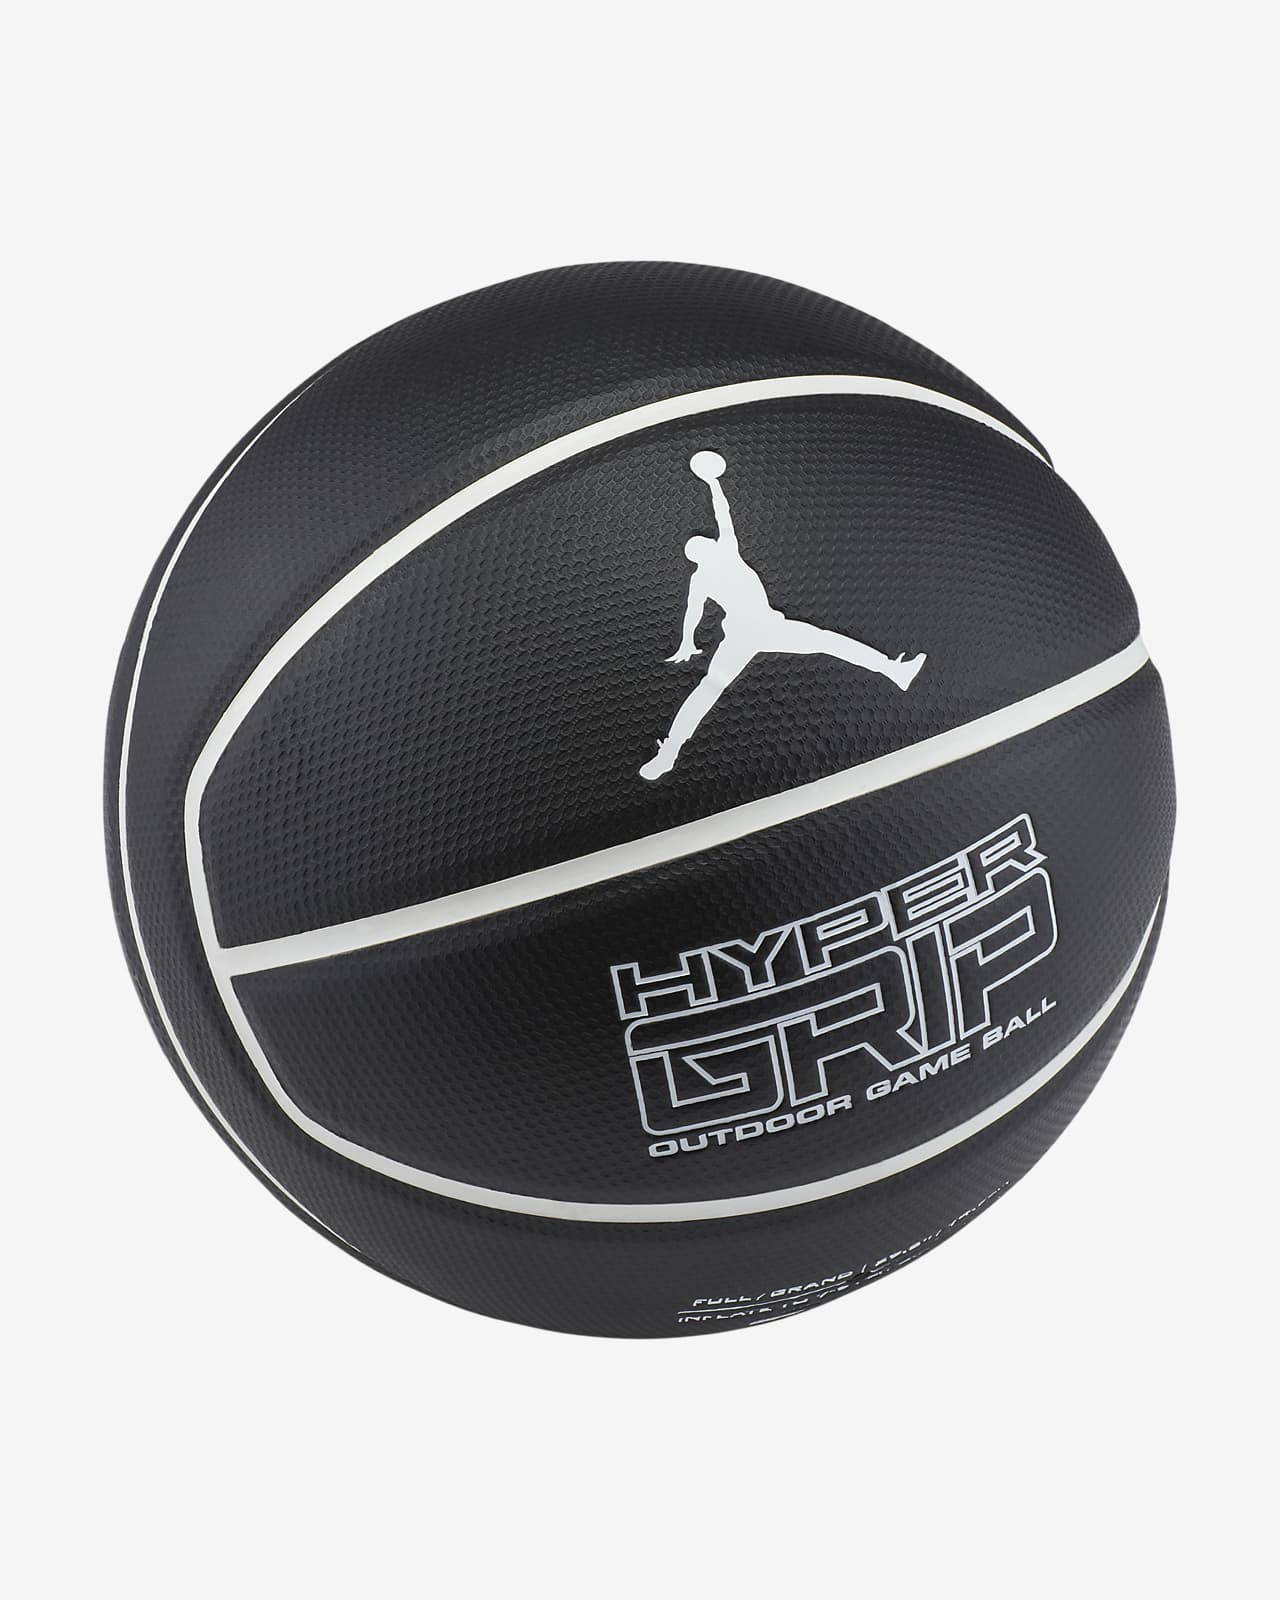 Jordan Hyper Grip 4P 籃球。Nike TW